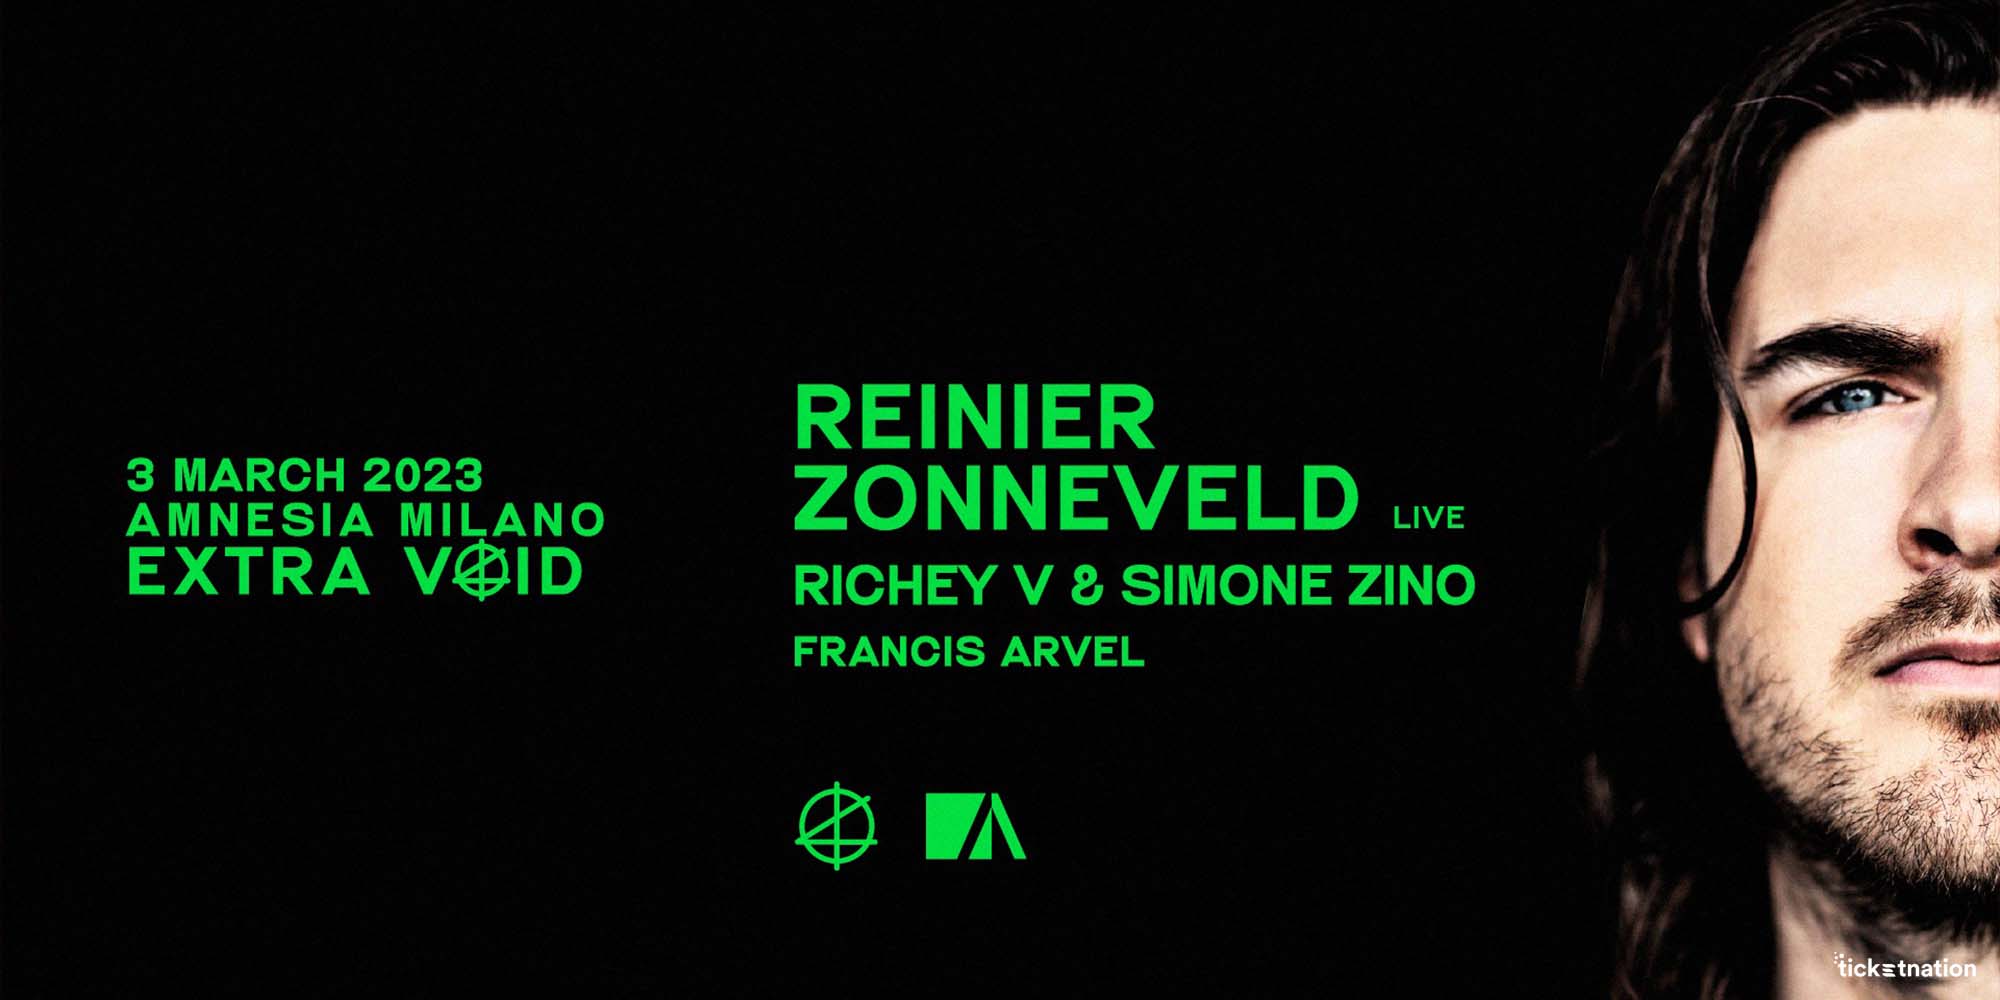 Reinier-Zonneveld-3-marzo-2023